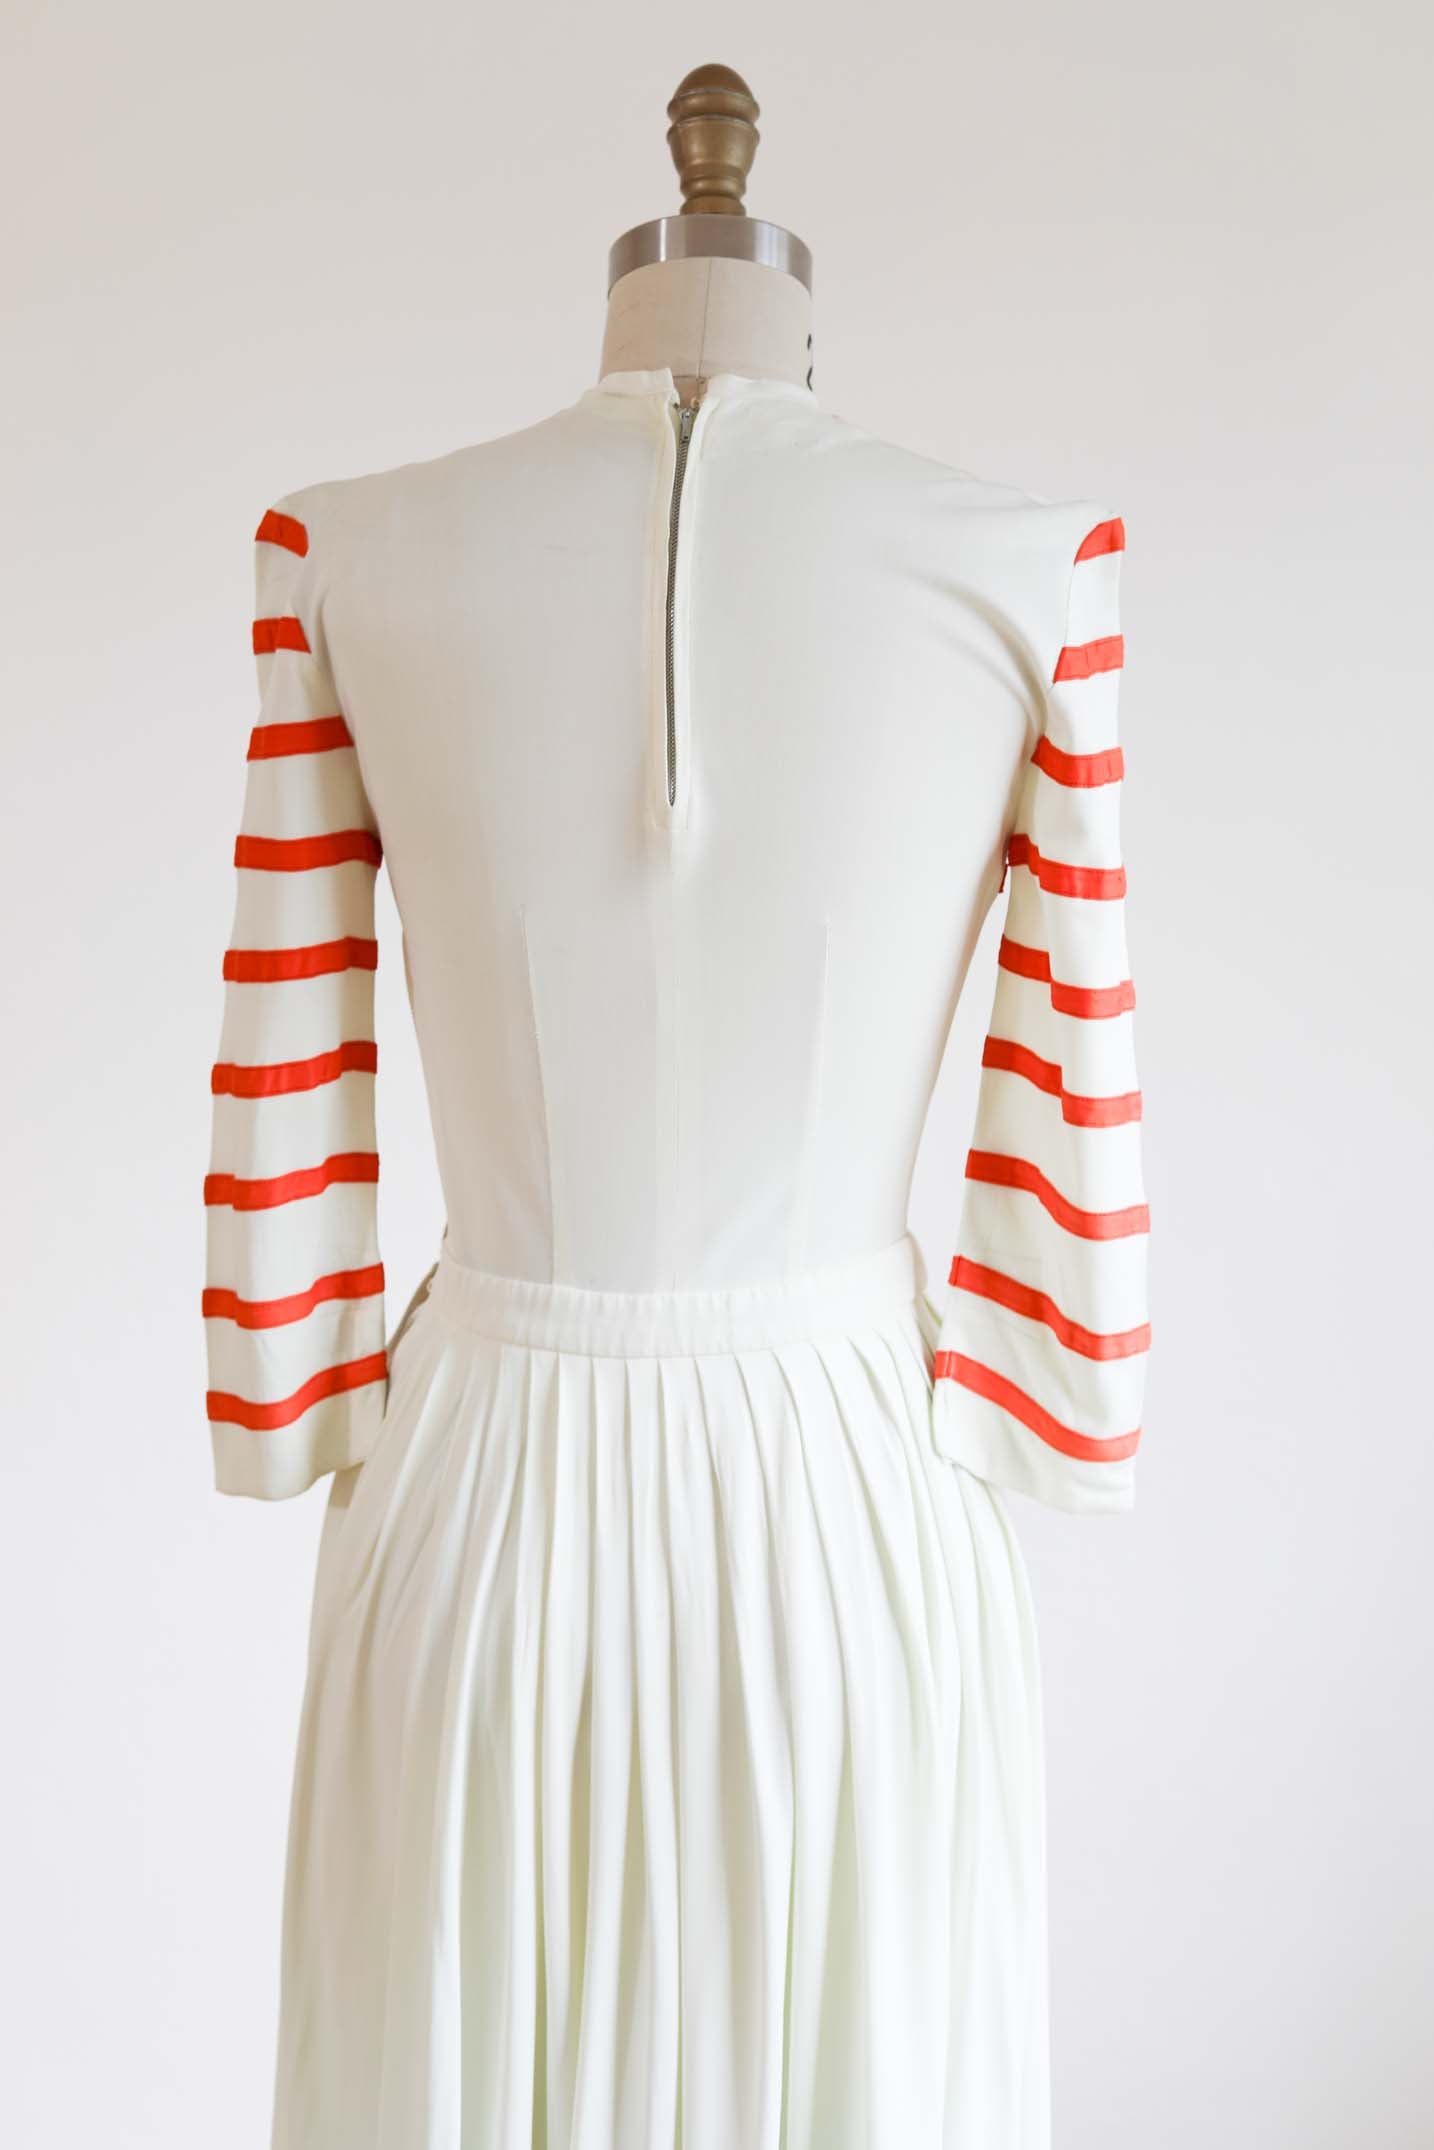 Vintage 1940s Slinky Rayon Jersey Dress - SWEET Carlye Ivory w Deep Tangerine Stripes Size XS